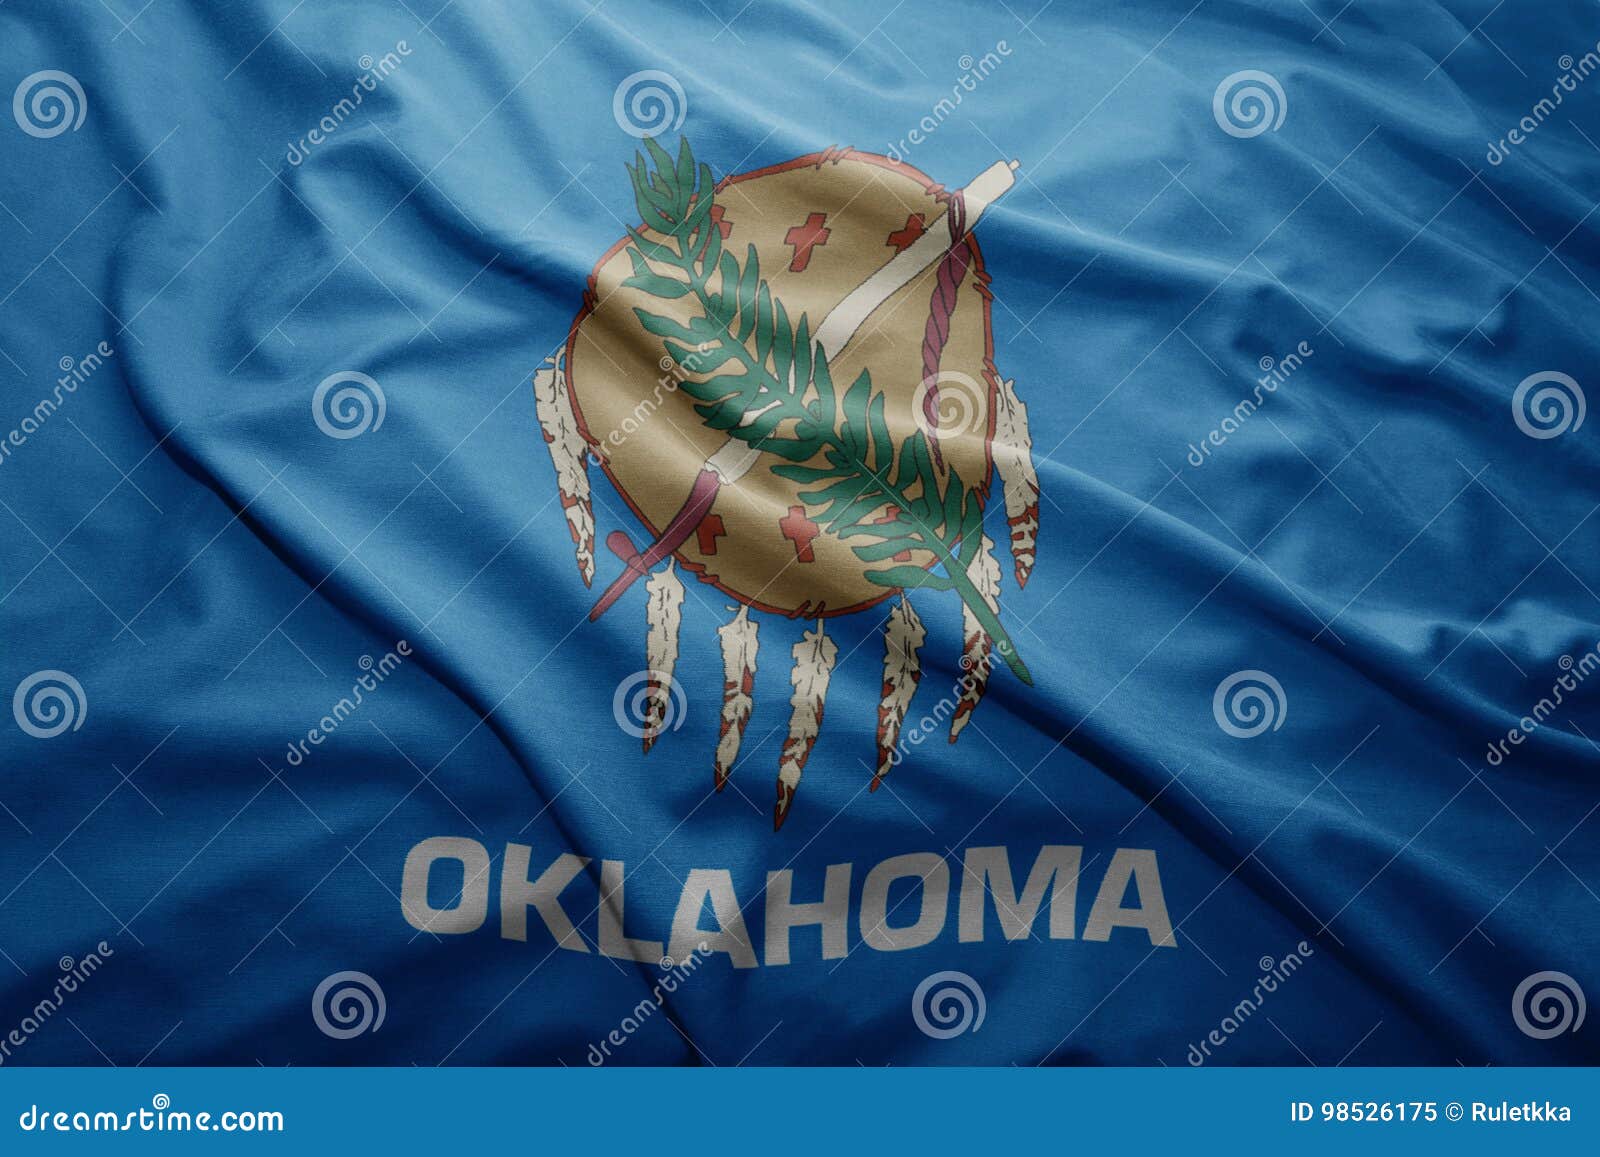 Flag Of Oklahoma State Stock Image Image Of Oklahoma 98526175